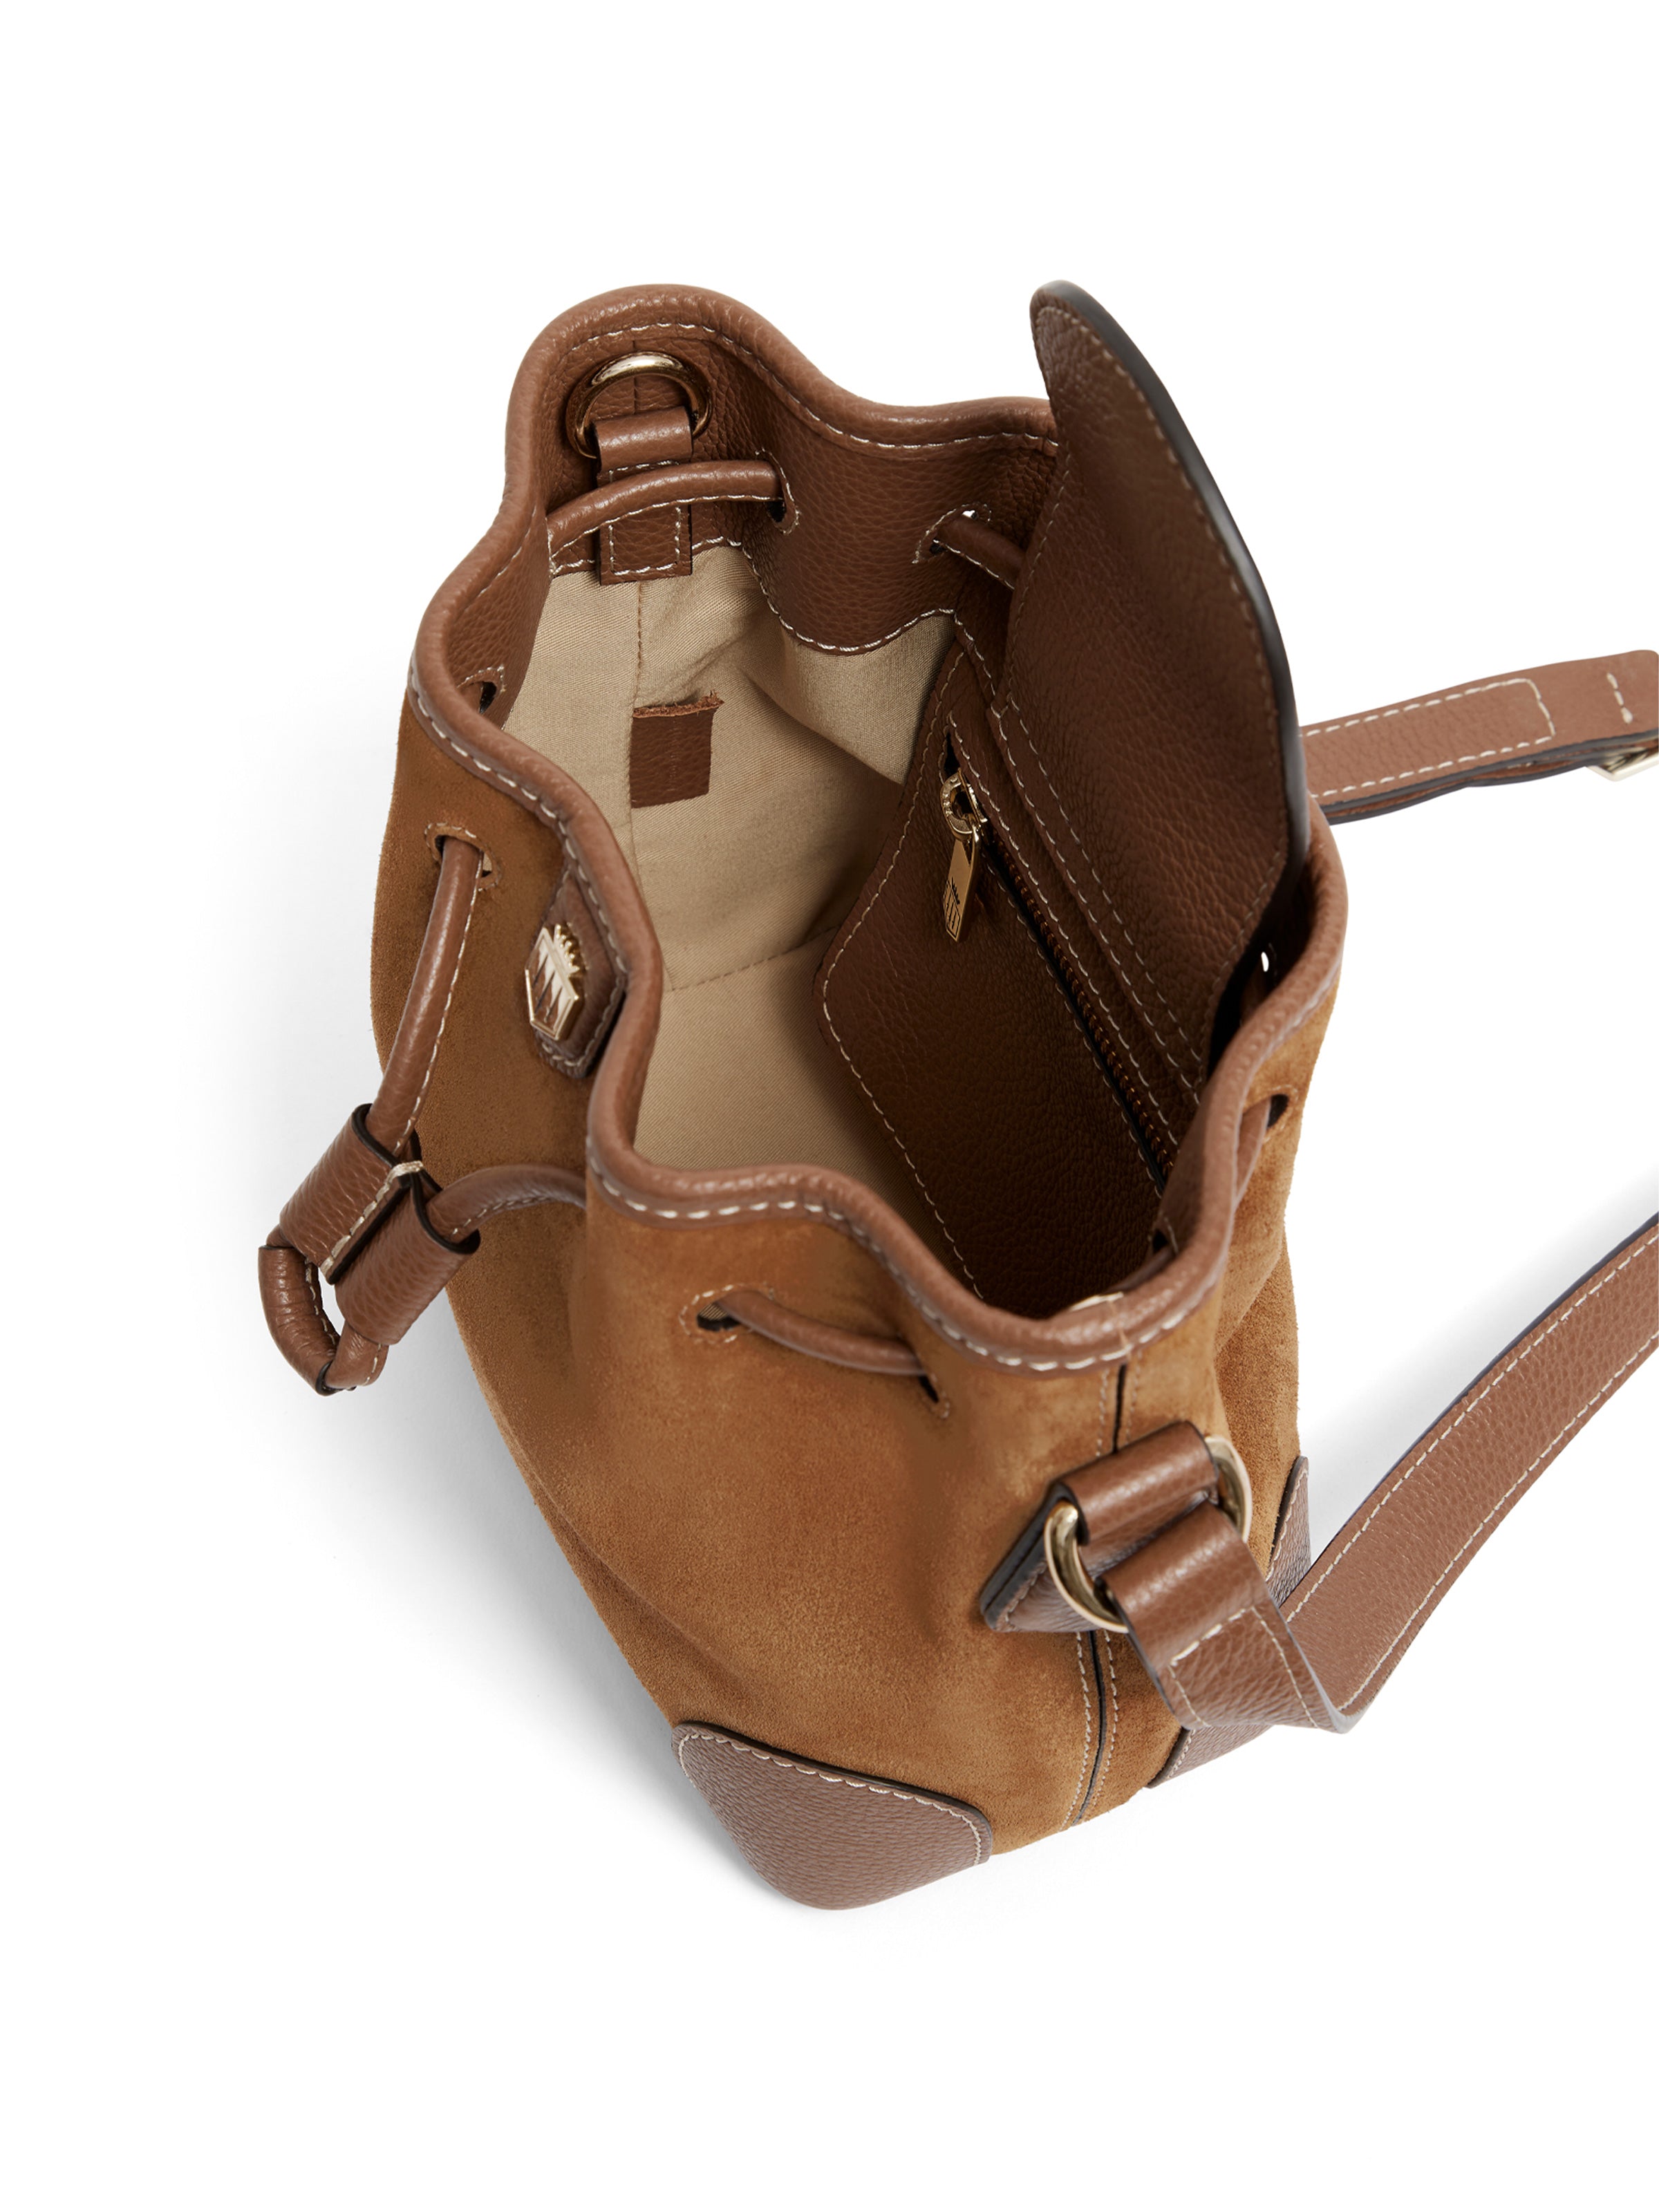 Fairfax & Favor Mini Bibury Bucket Bag